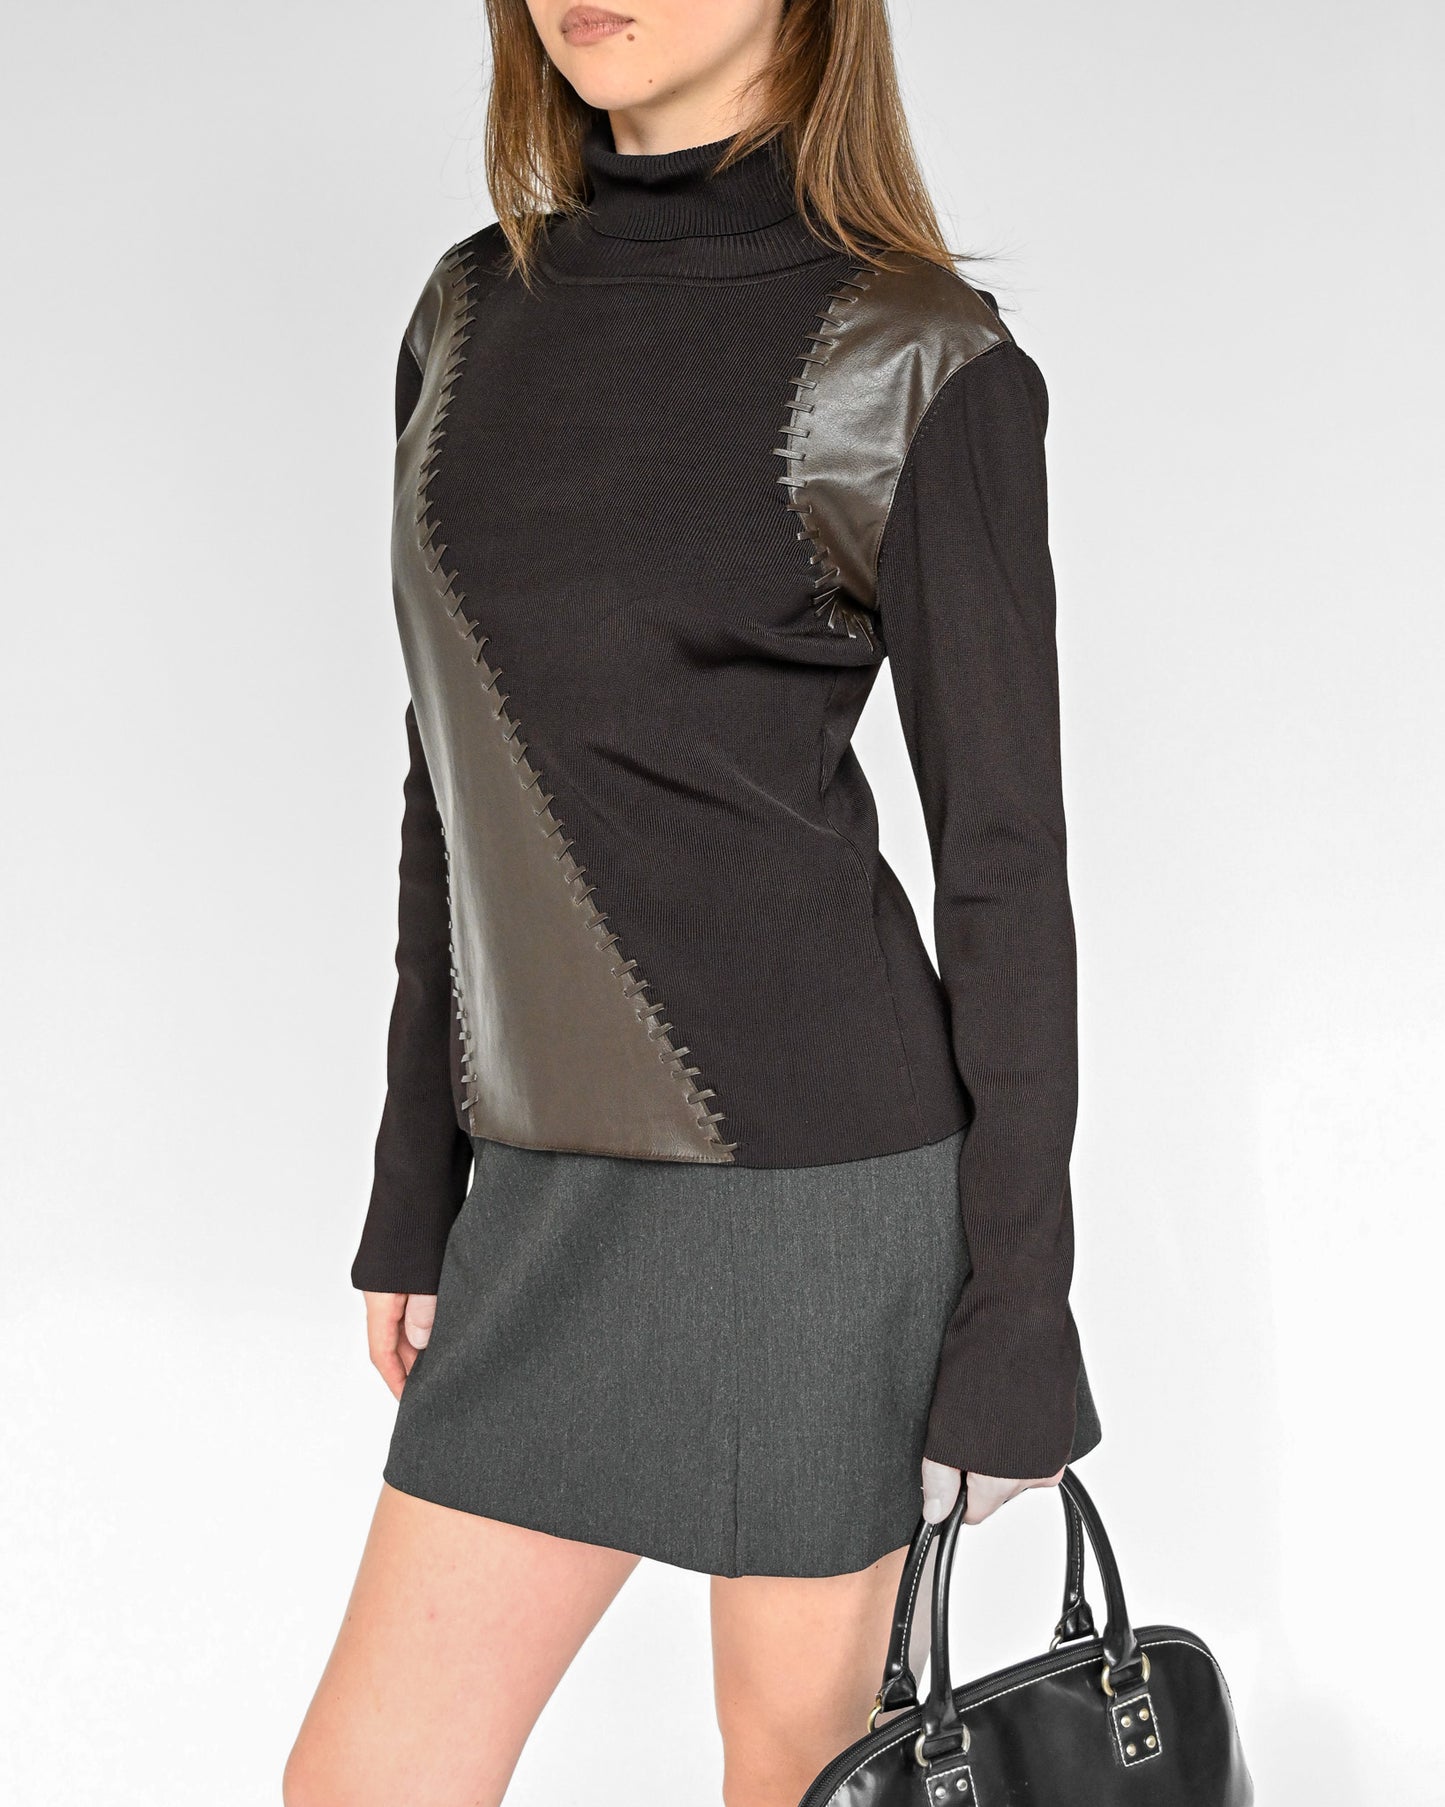 Brown Paneled Leather Knit Turtleneck (M)